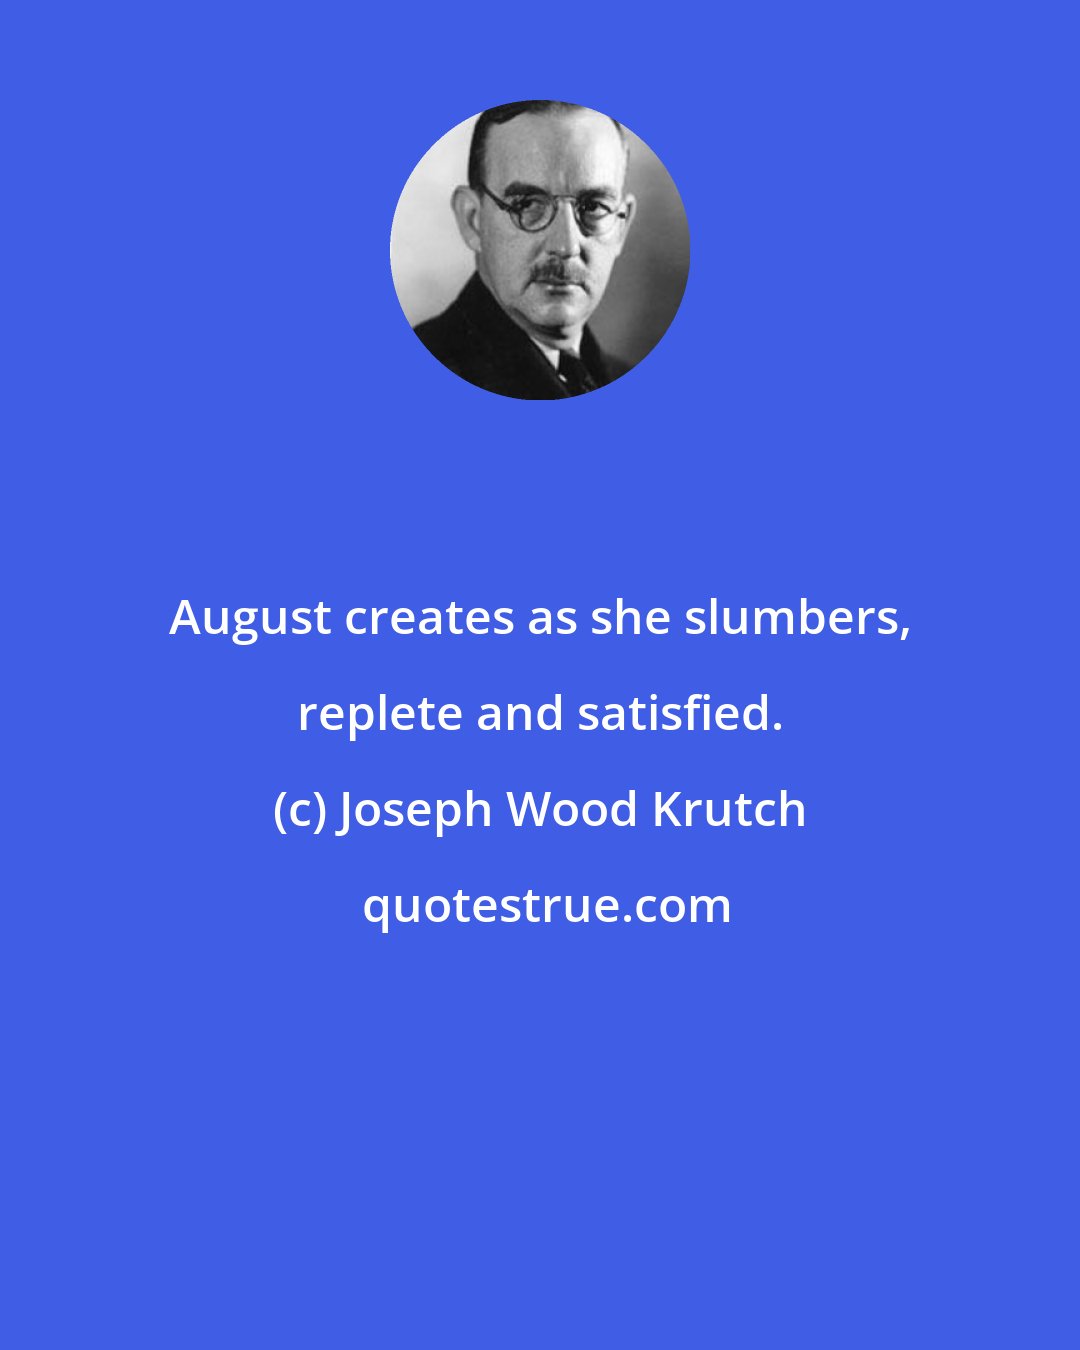 Joseph Wood Krutch: August creates as she slumbers, replete and satisfied.